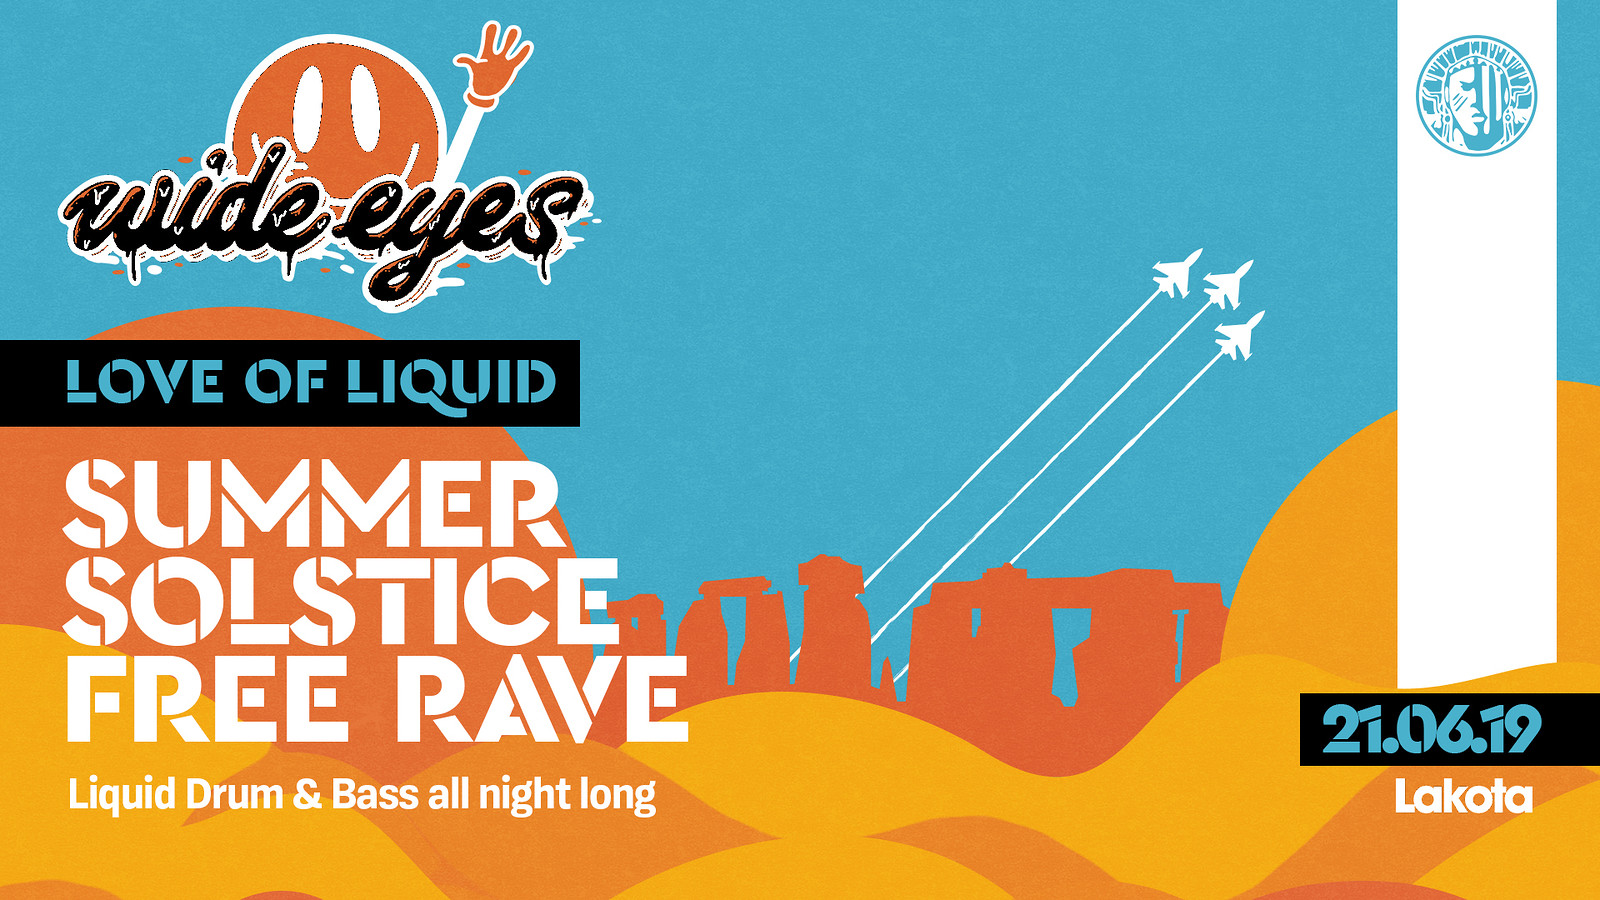 Love of Liquid - Summer Solstice D&B Free Rave at Lakota